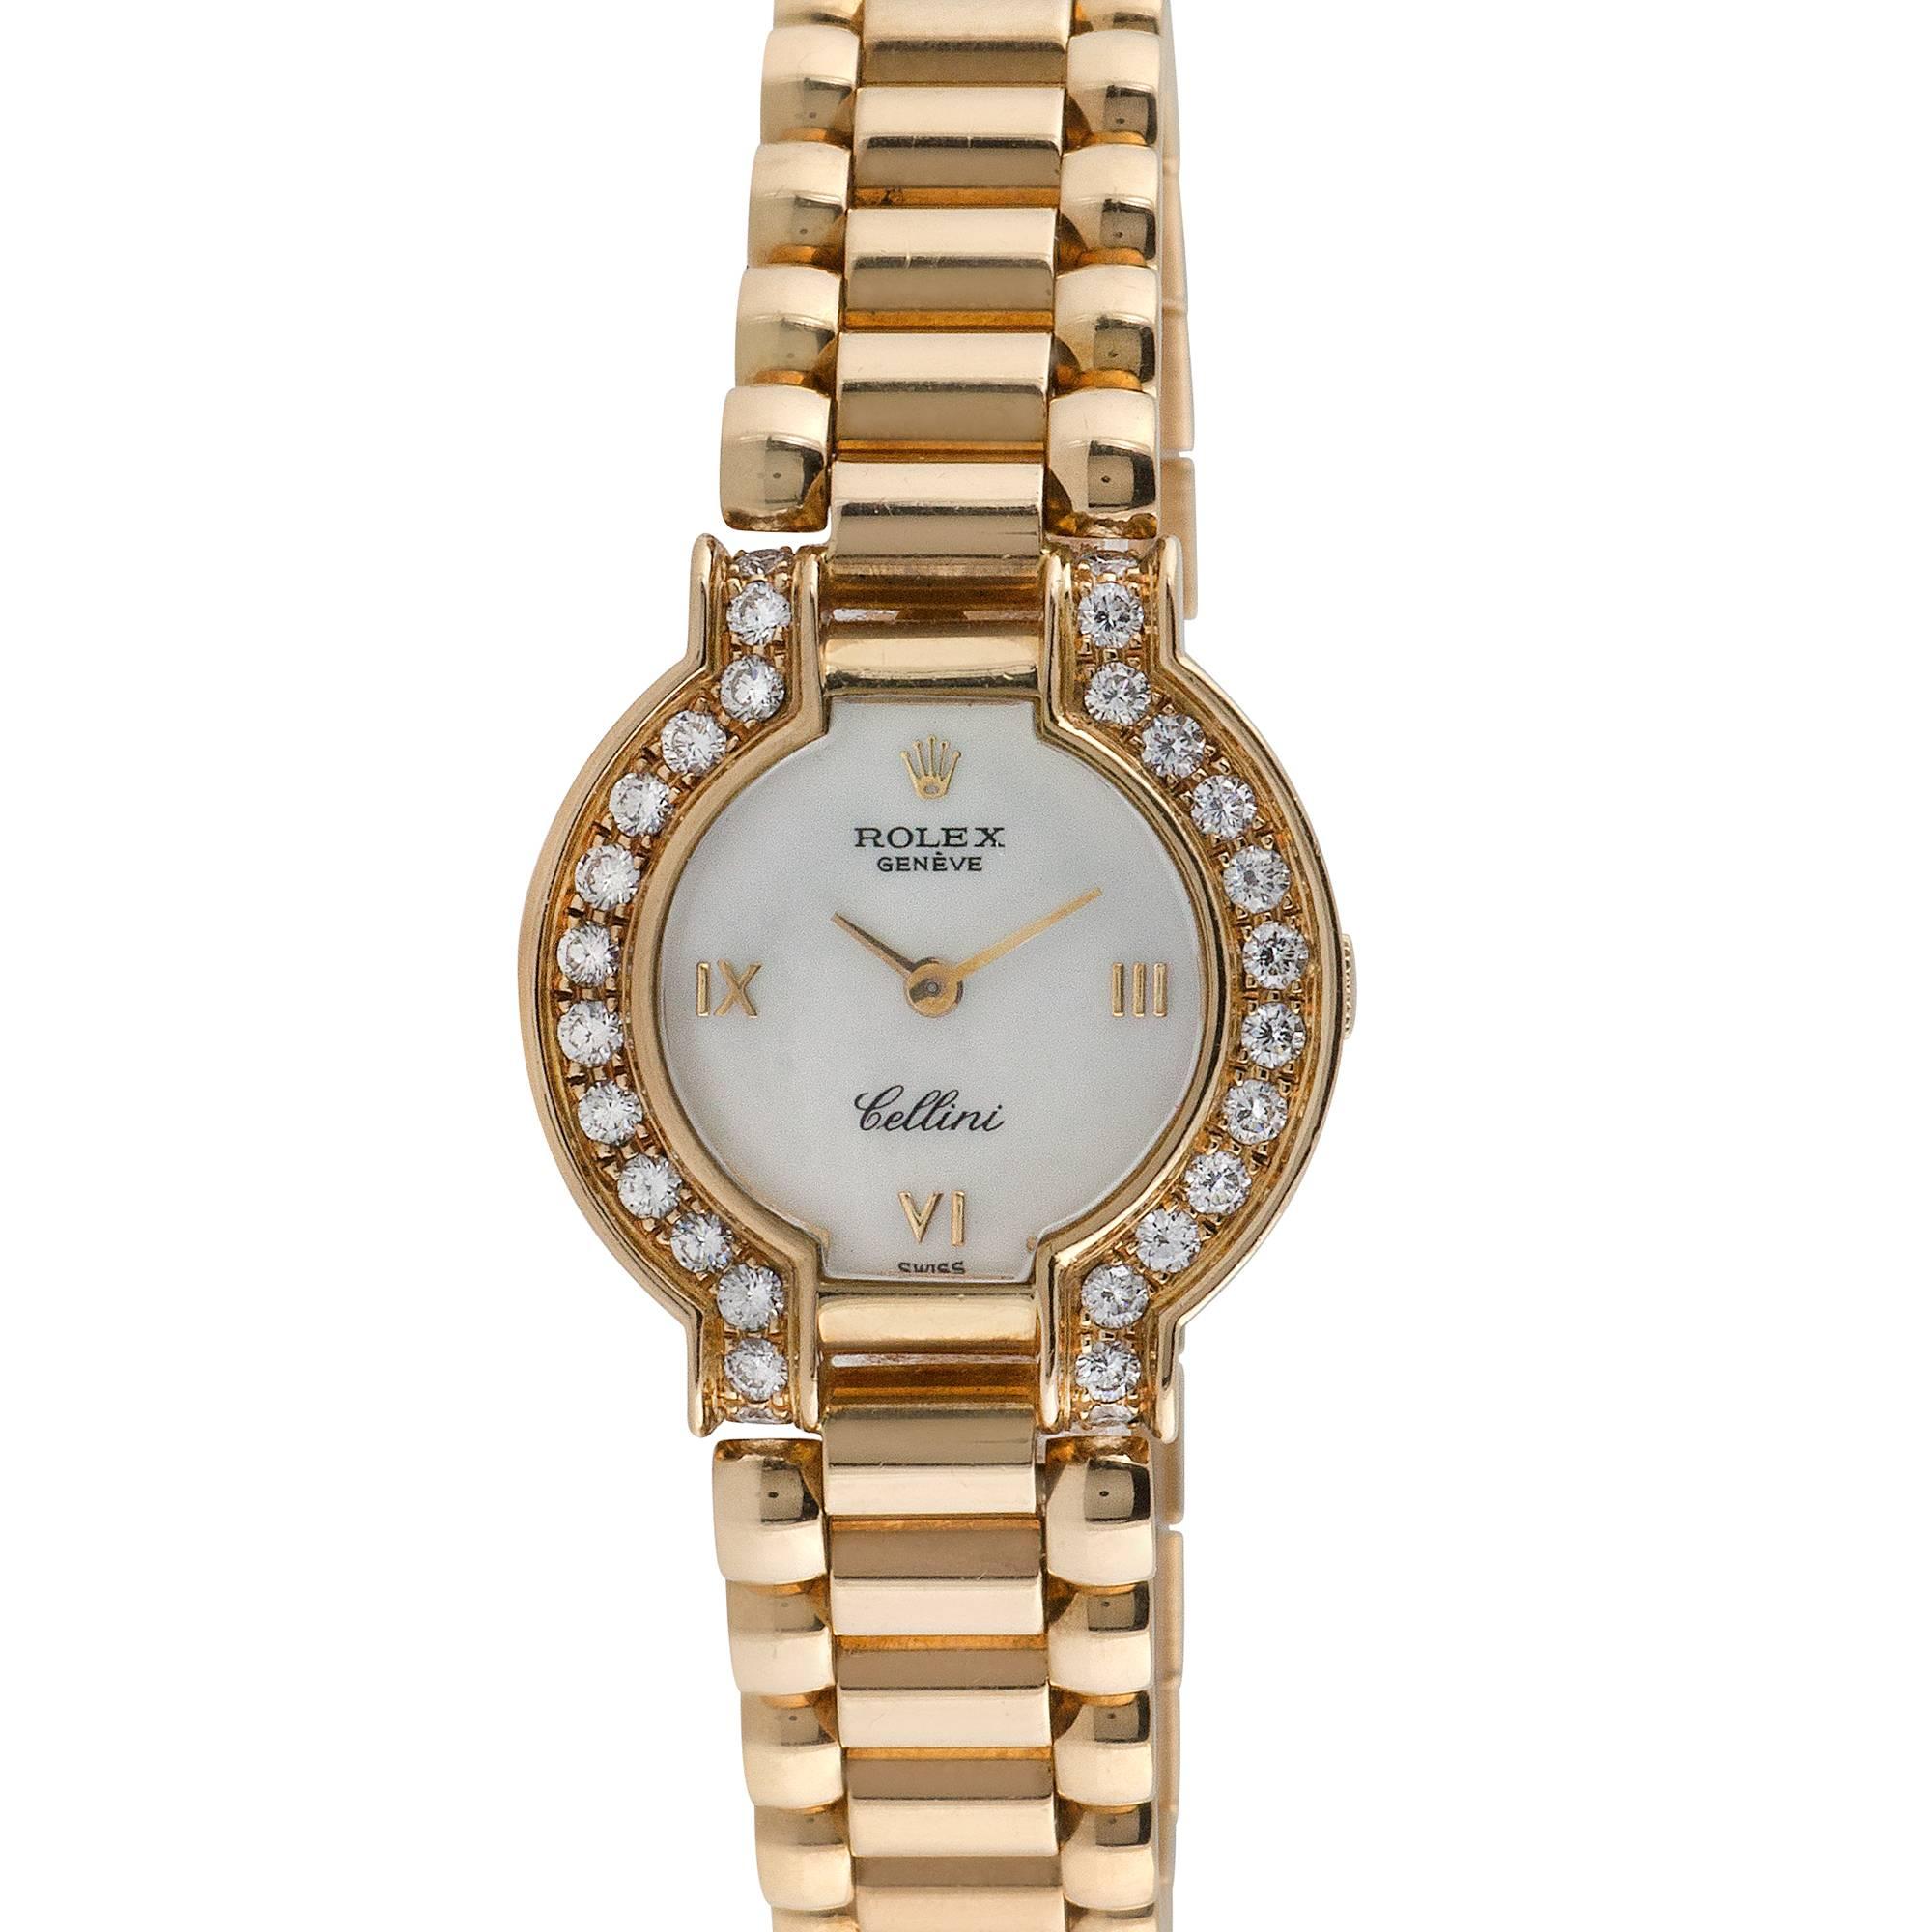 Rolex Ladies Cellini 18K Yellow Gold Diamond Wristwatch, Ref 2253, Circa 1980